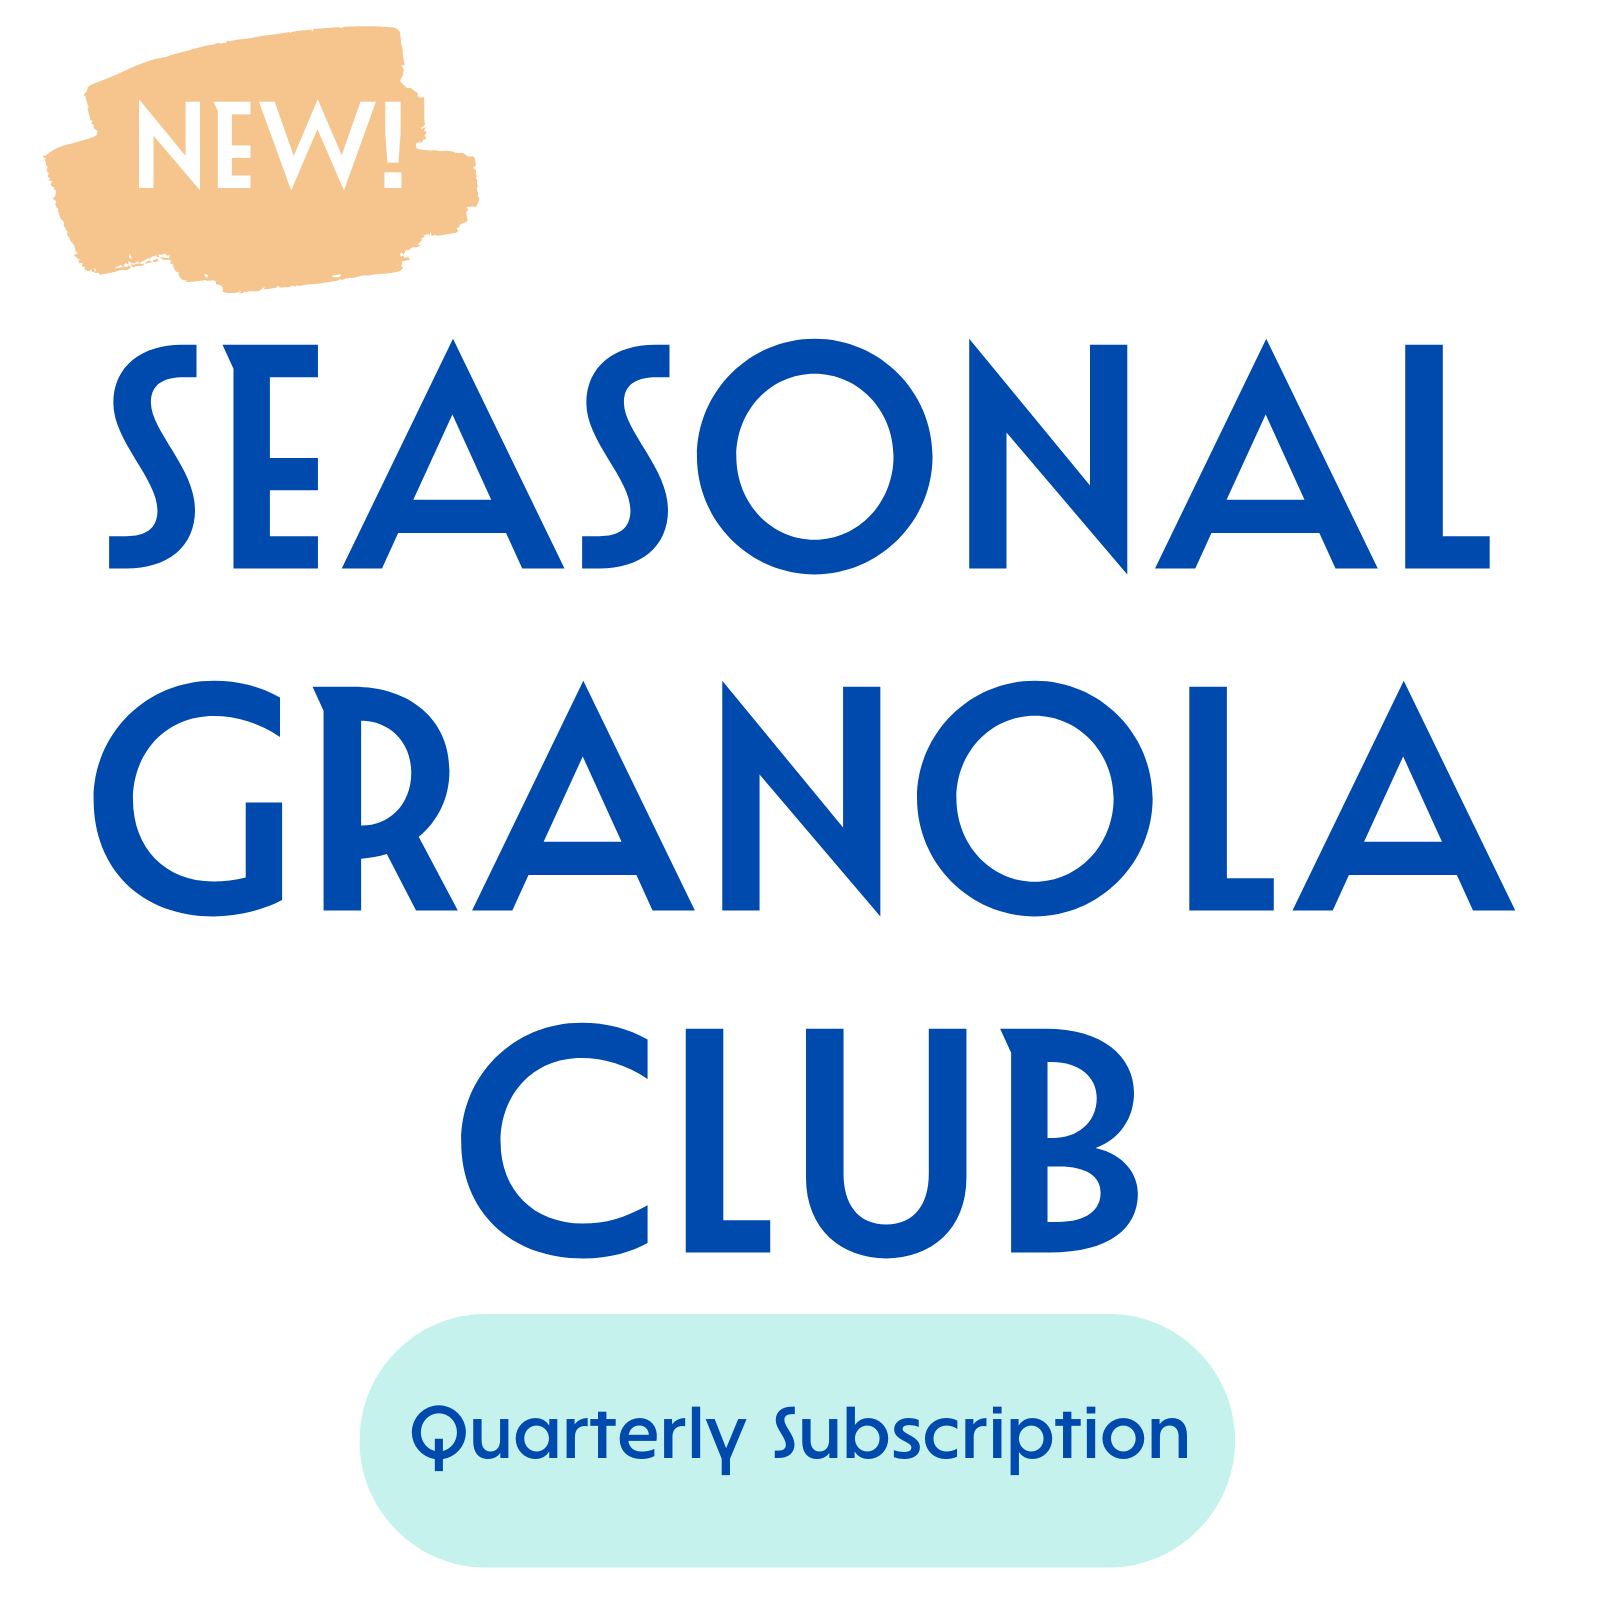 Seasonal Granola Club